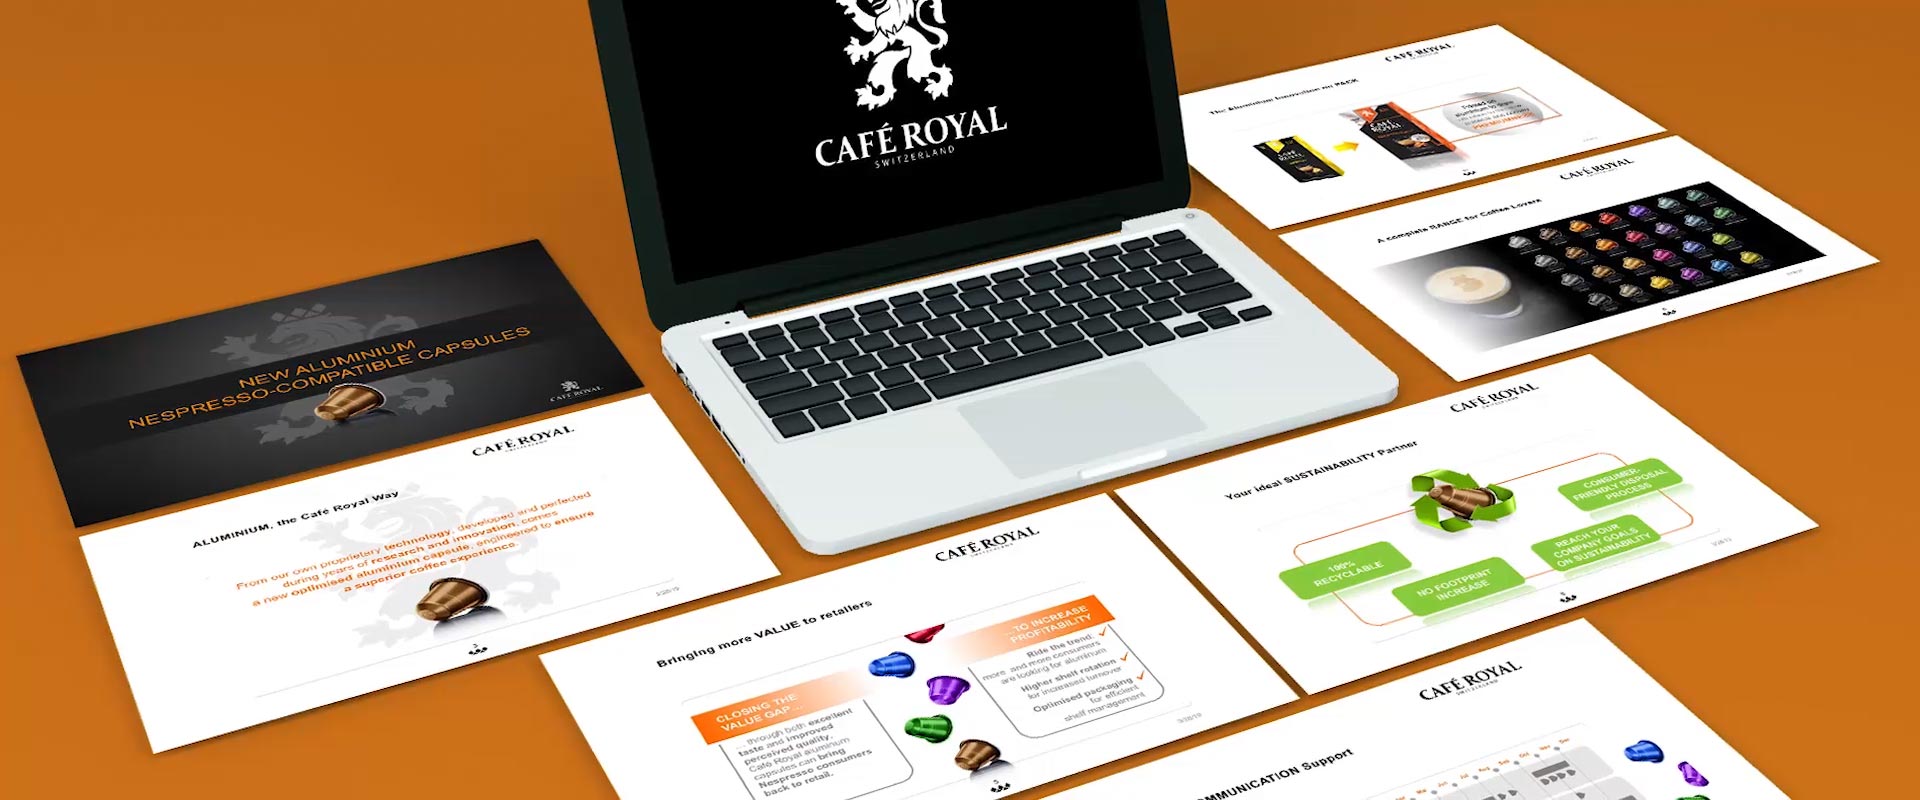 B2B sales presentation for Café Royal